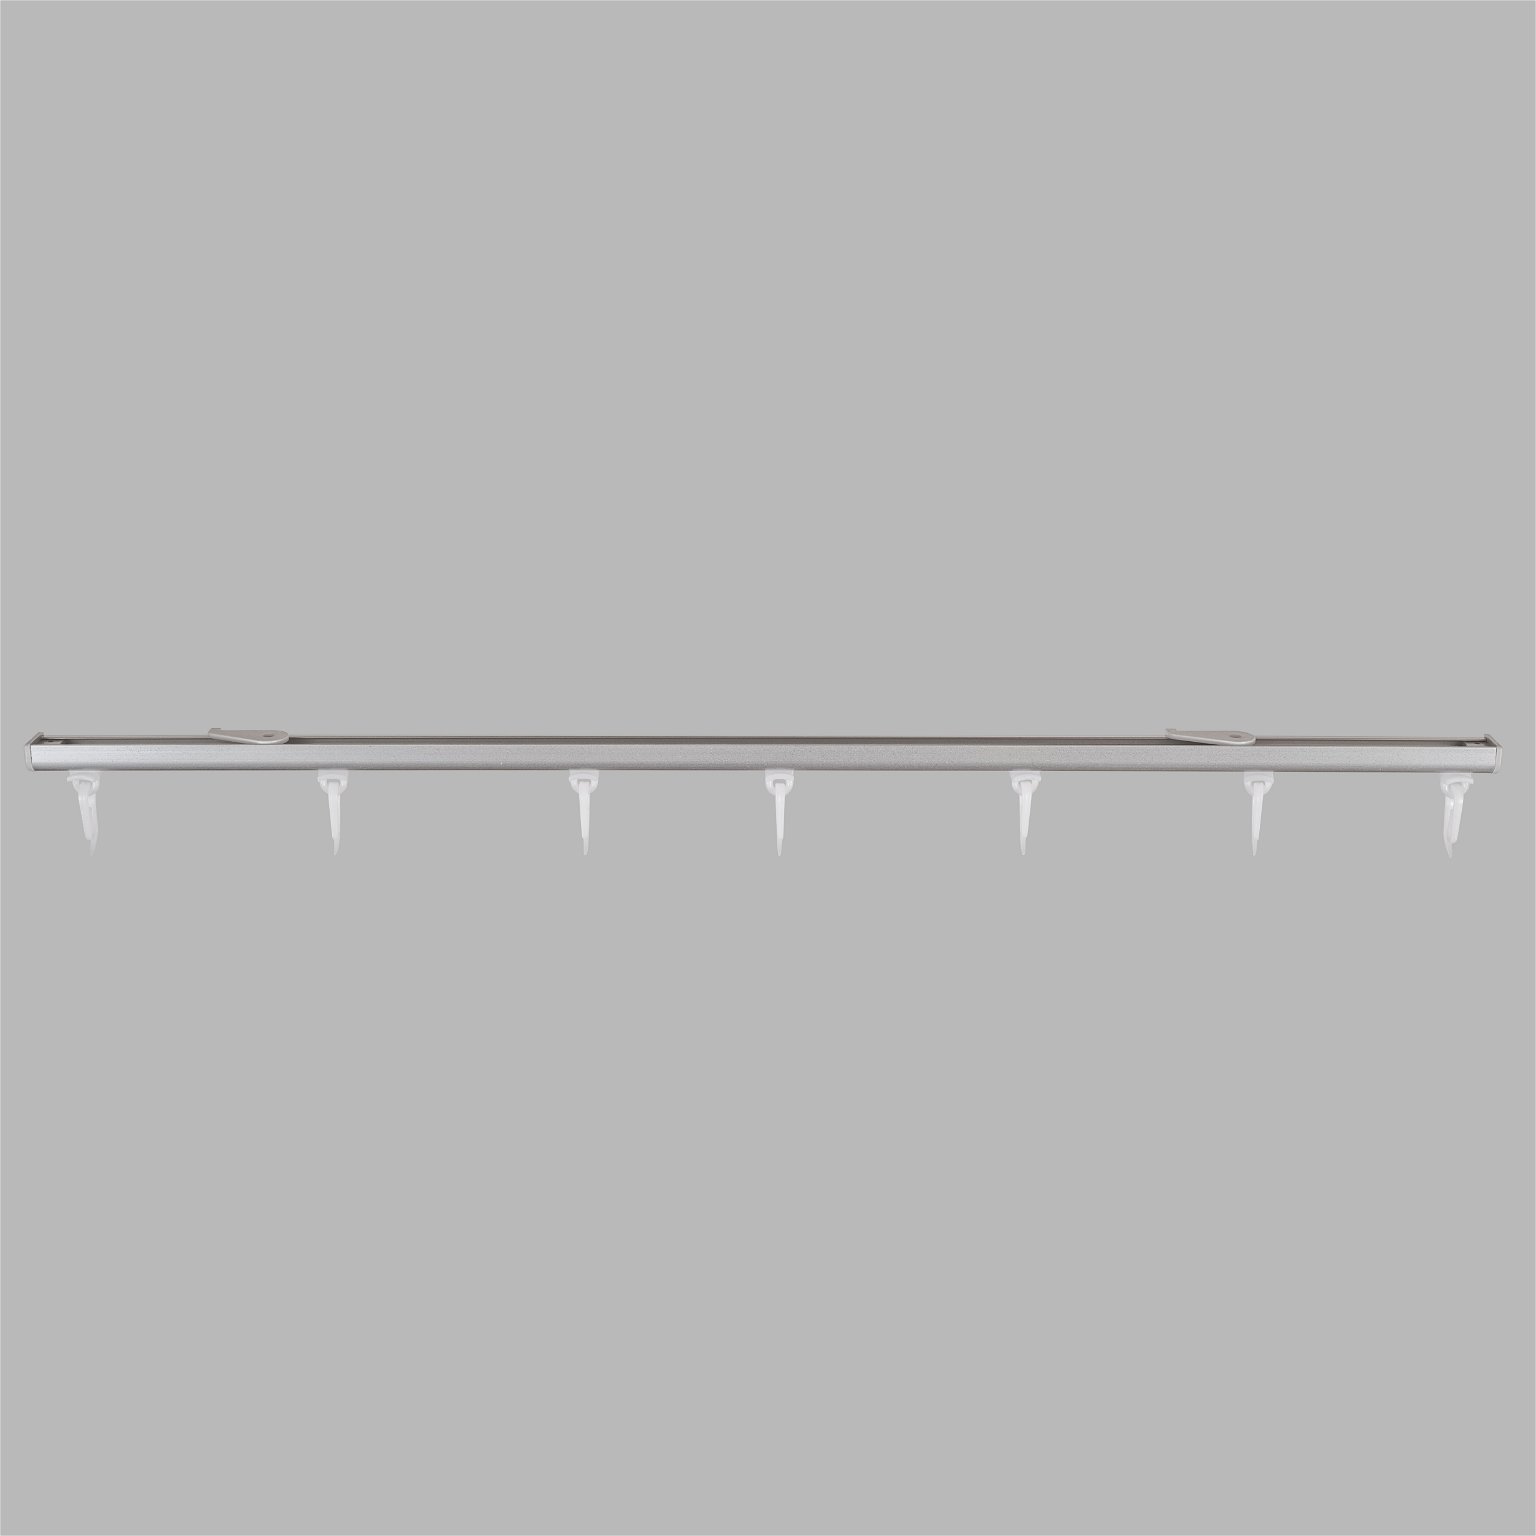 Aliuminio profilis D, matinio chromo sp., 300 cm, sukomplektuotas